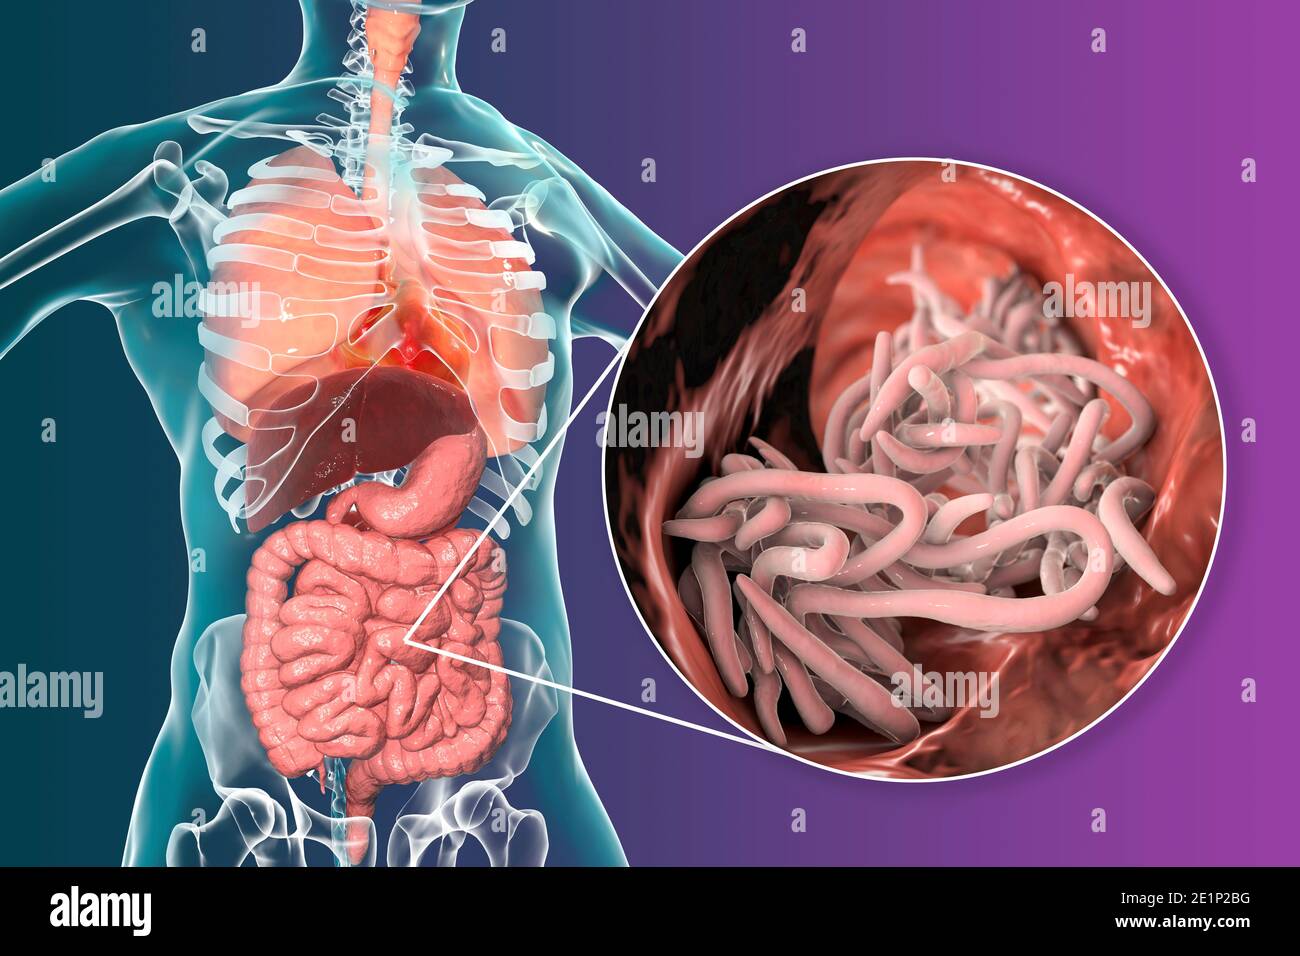 Round worms in human intestine, illustration Stock Photo